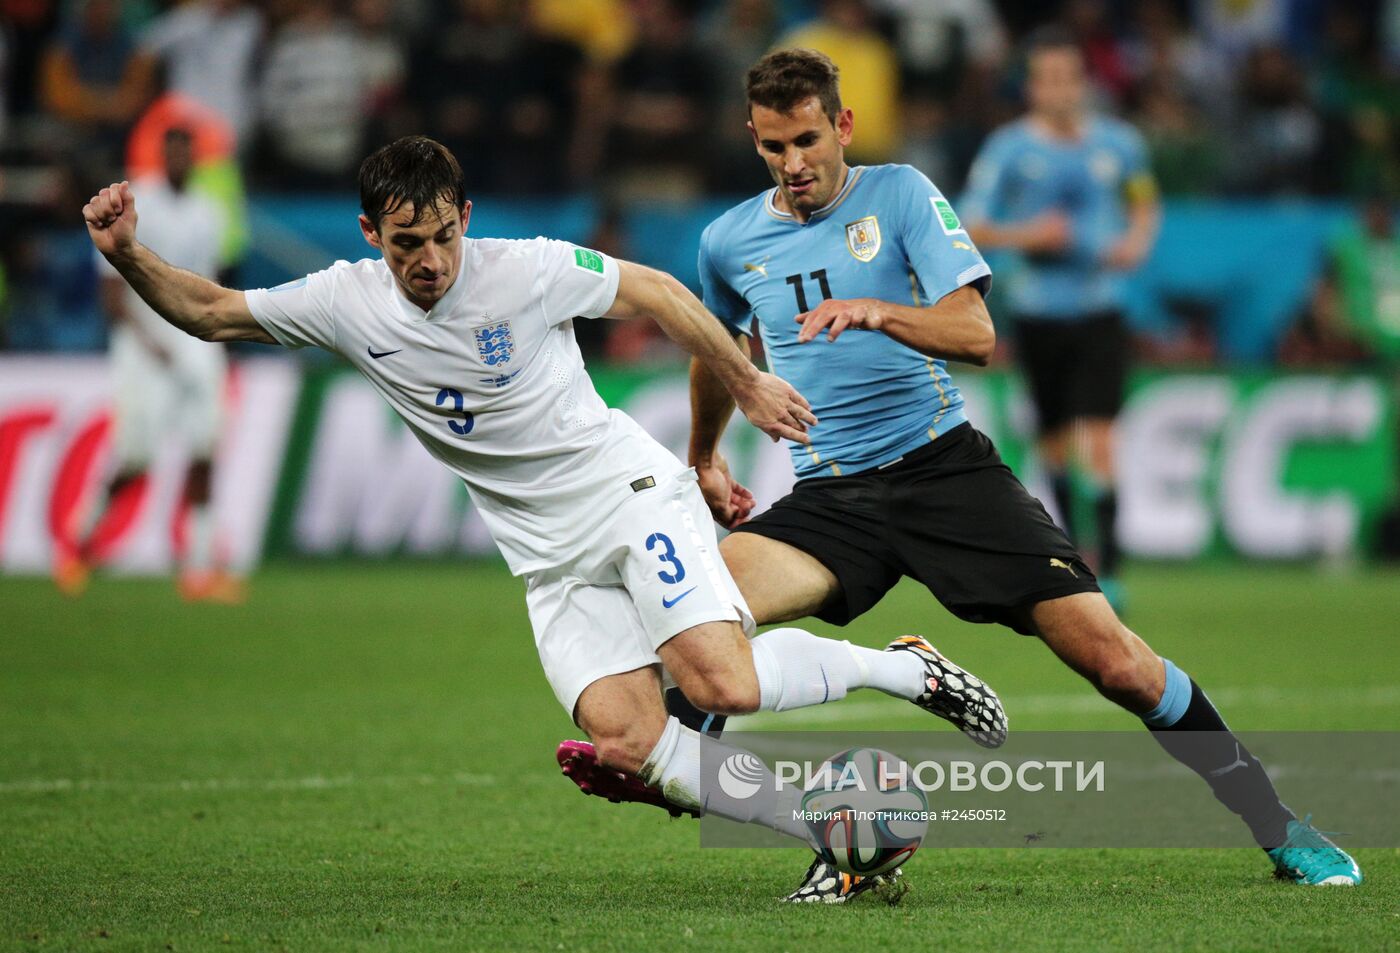 Фото с матча Уругвай Россия. Футбол матч 2014